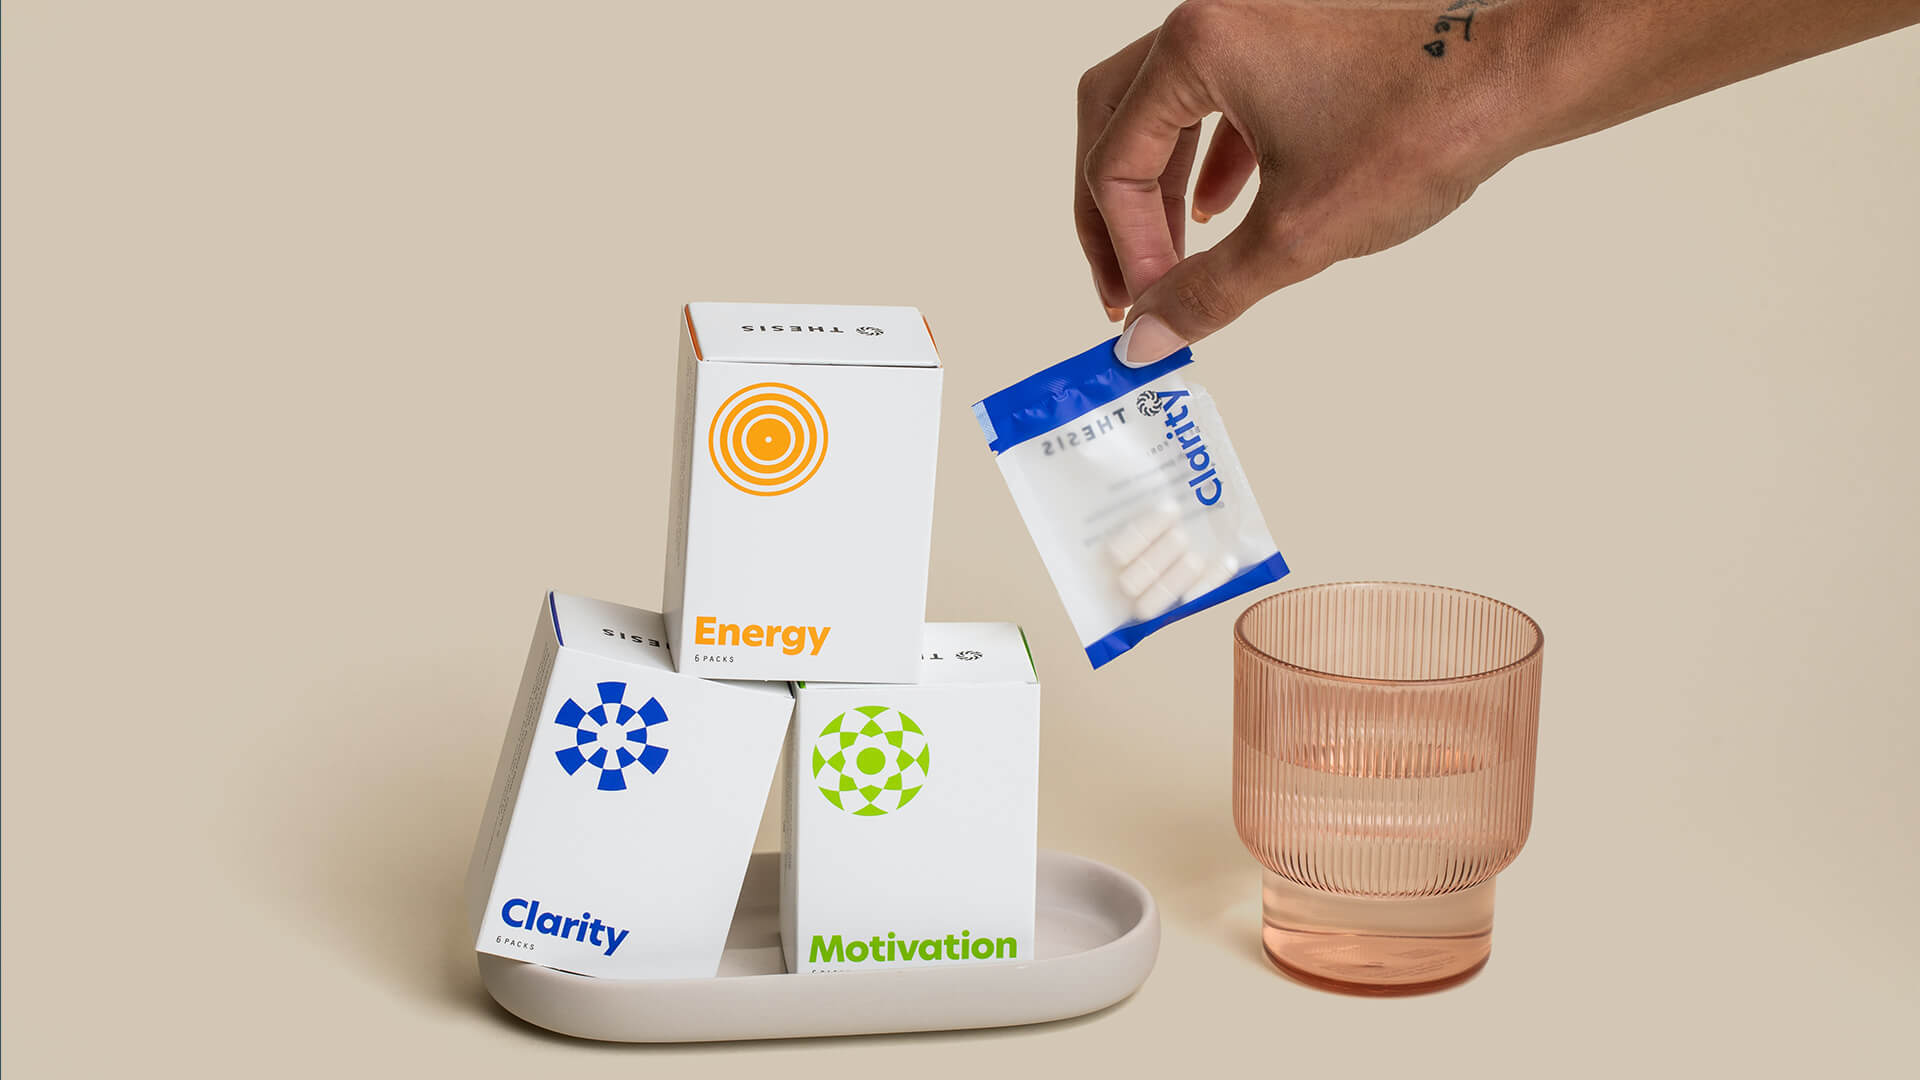 Supplement minimalist branding on packaging